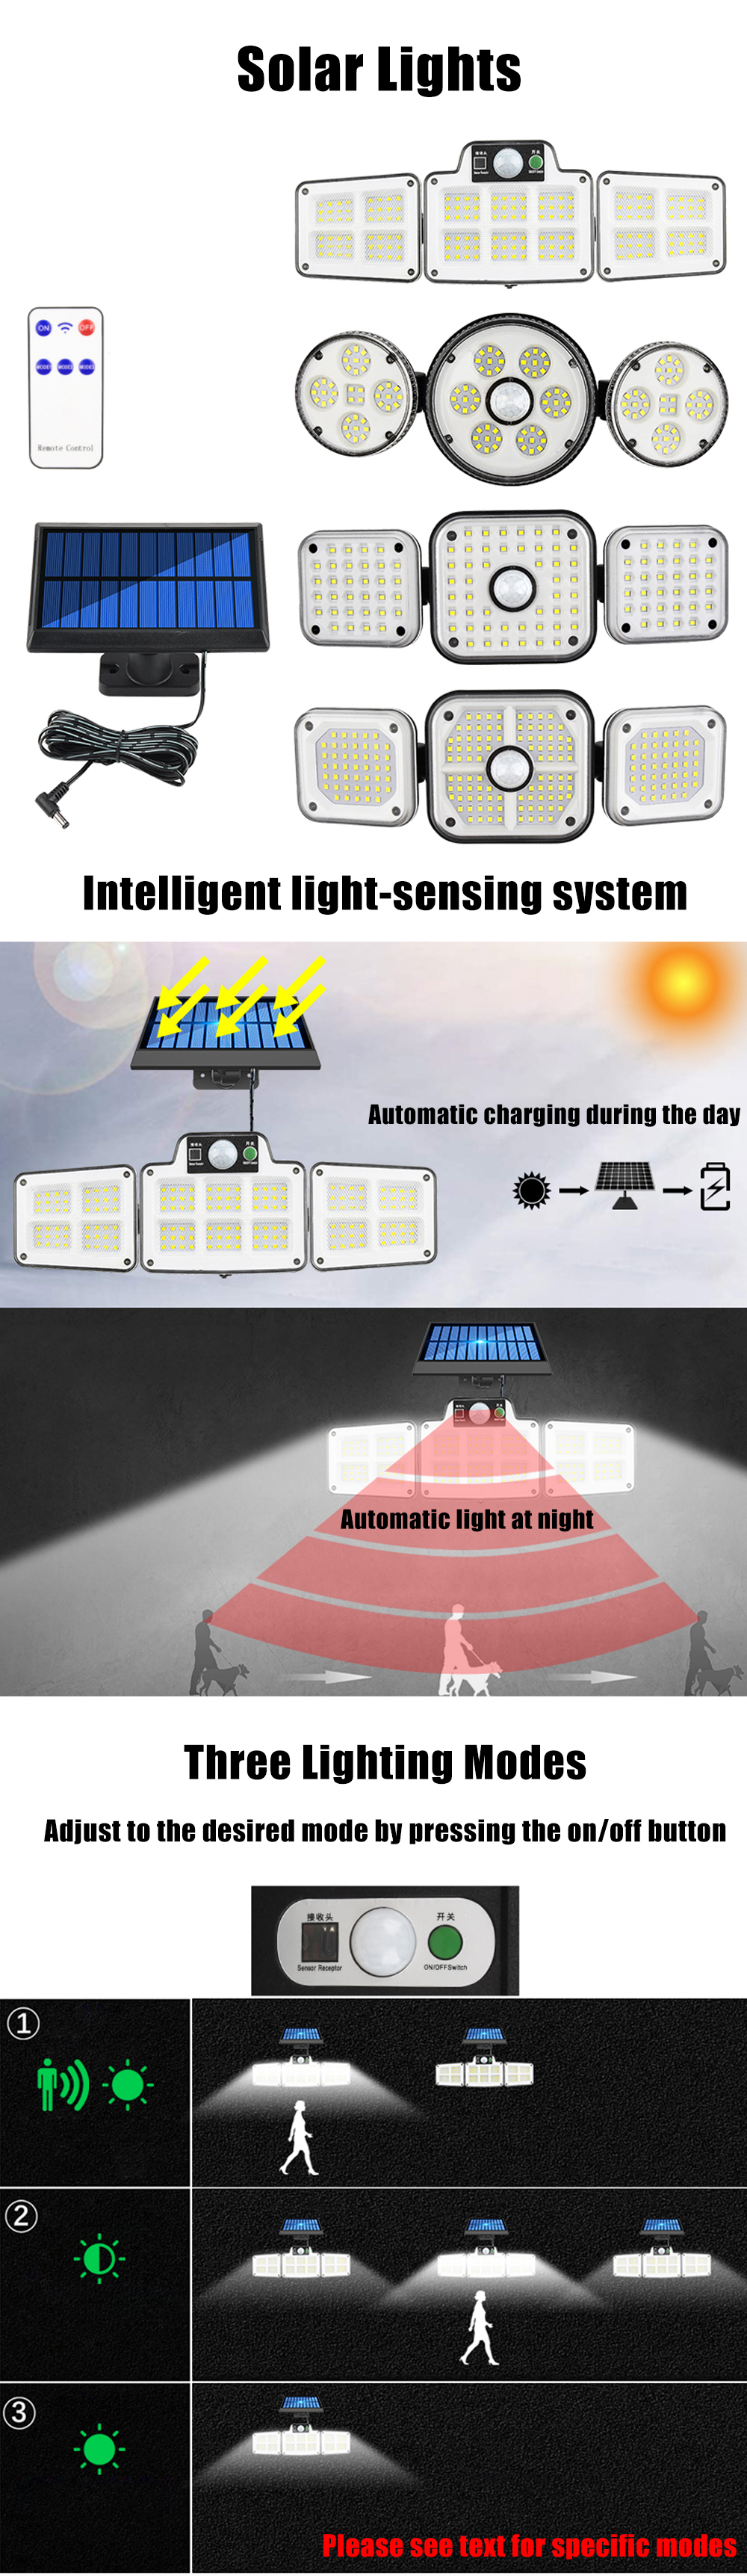 IPReereg-Solar-Wall-Light-with-Remote-Control-Intelligent-Body-Sensor-Light-LED-Split-Adjustable-Wat-1902421-1